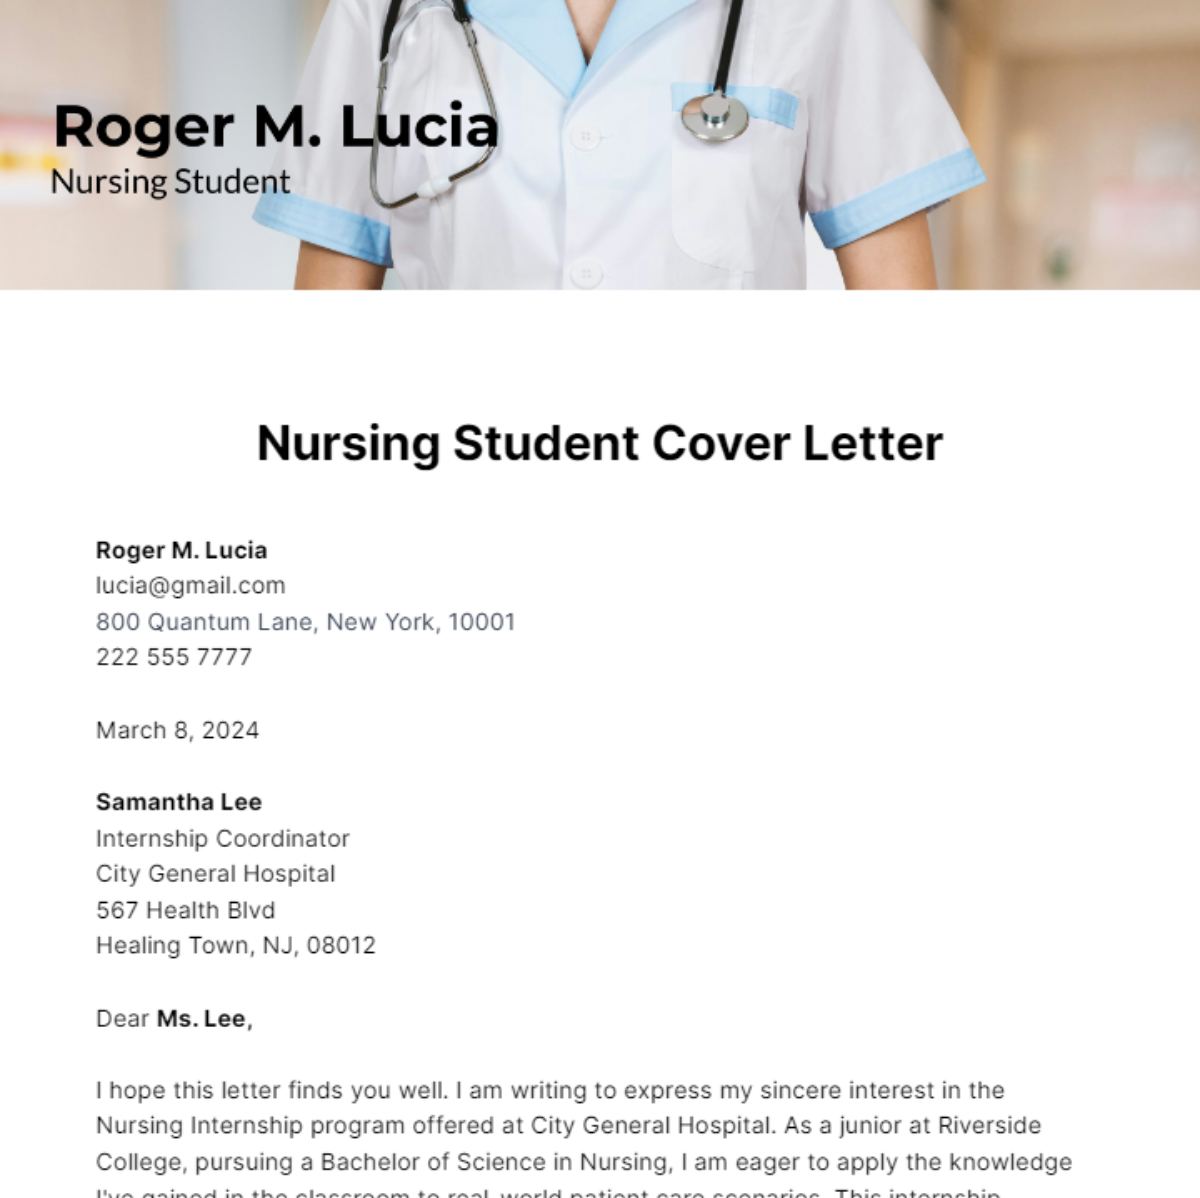 Nursing Student Cover Letter Template